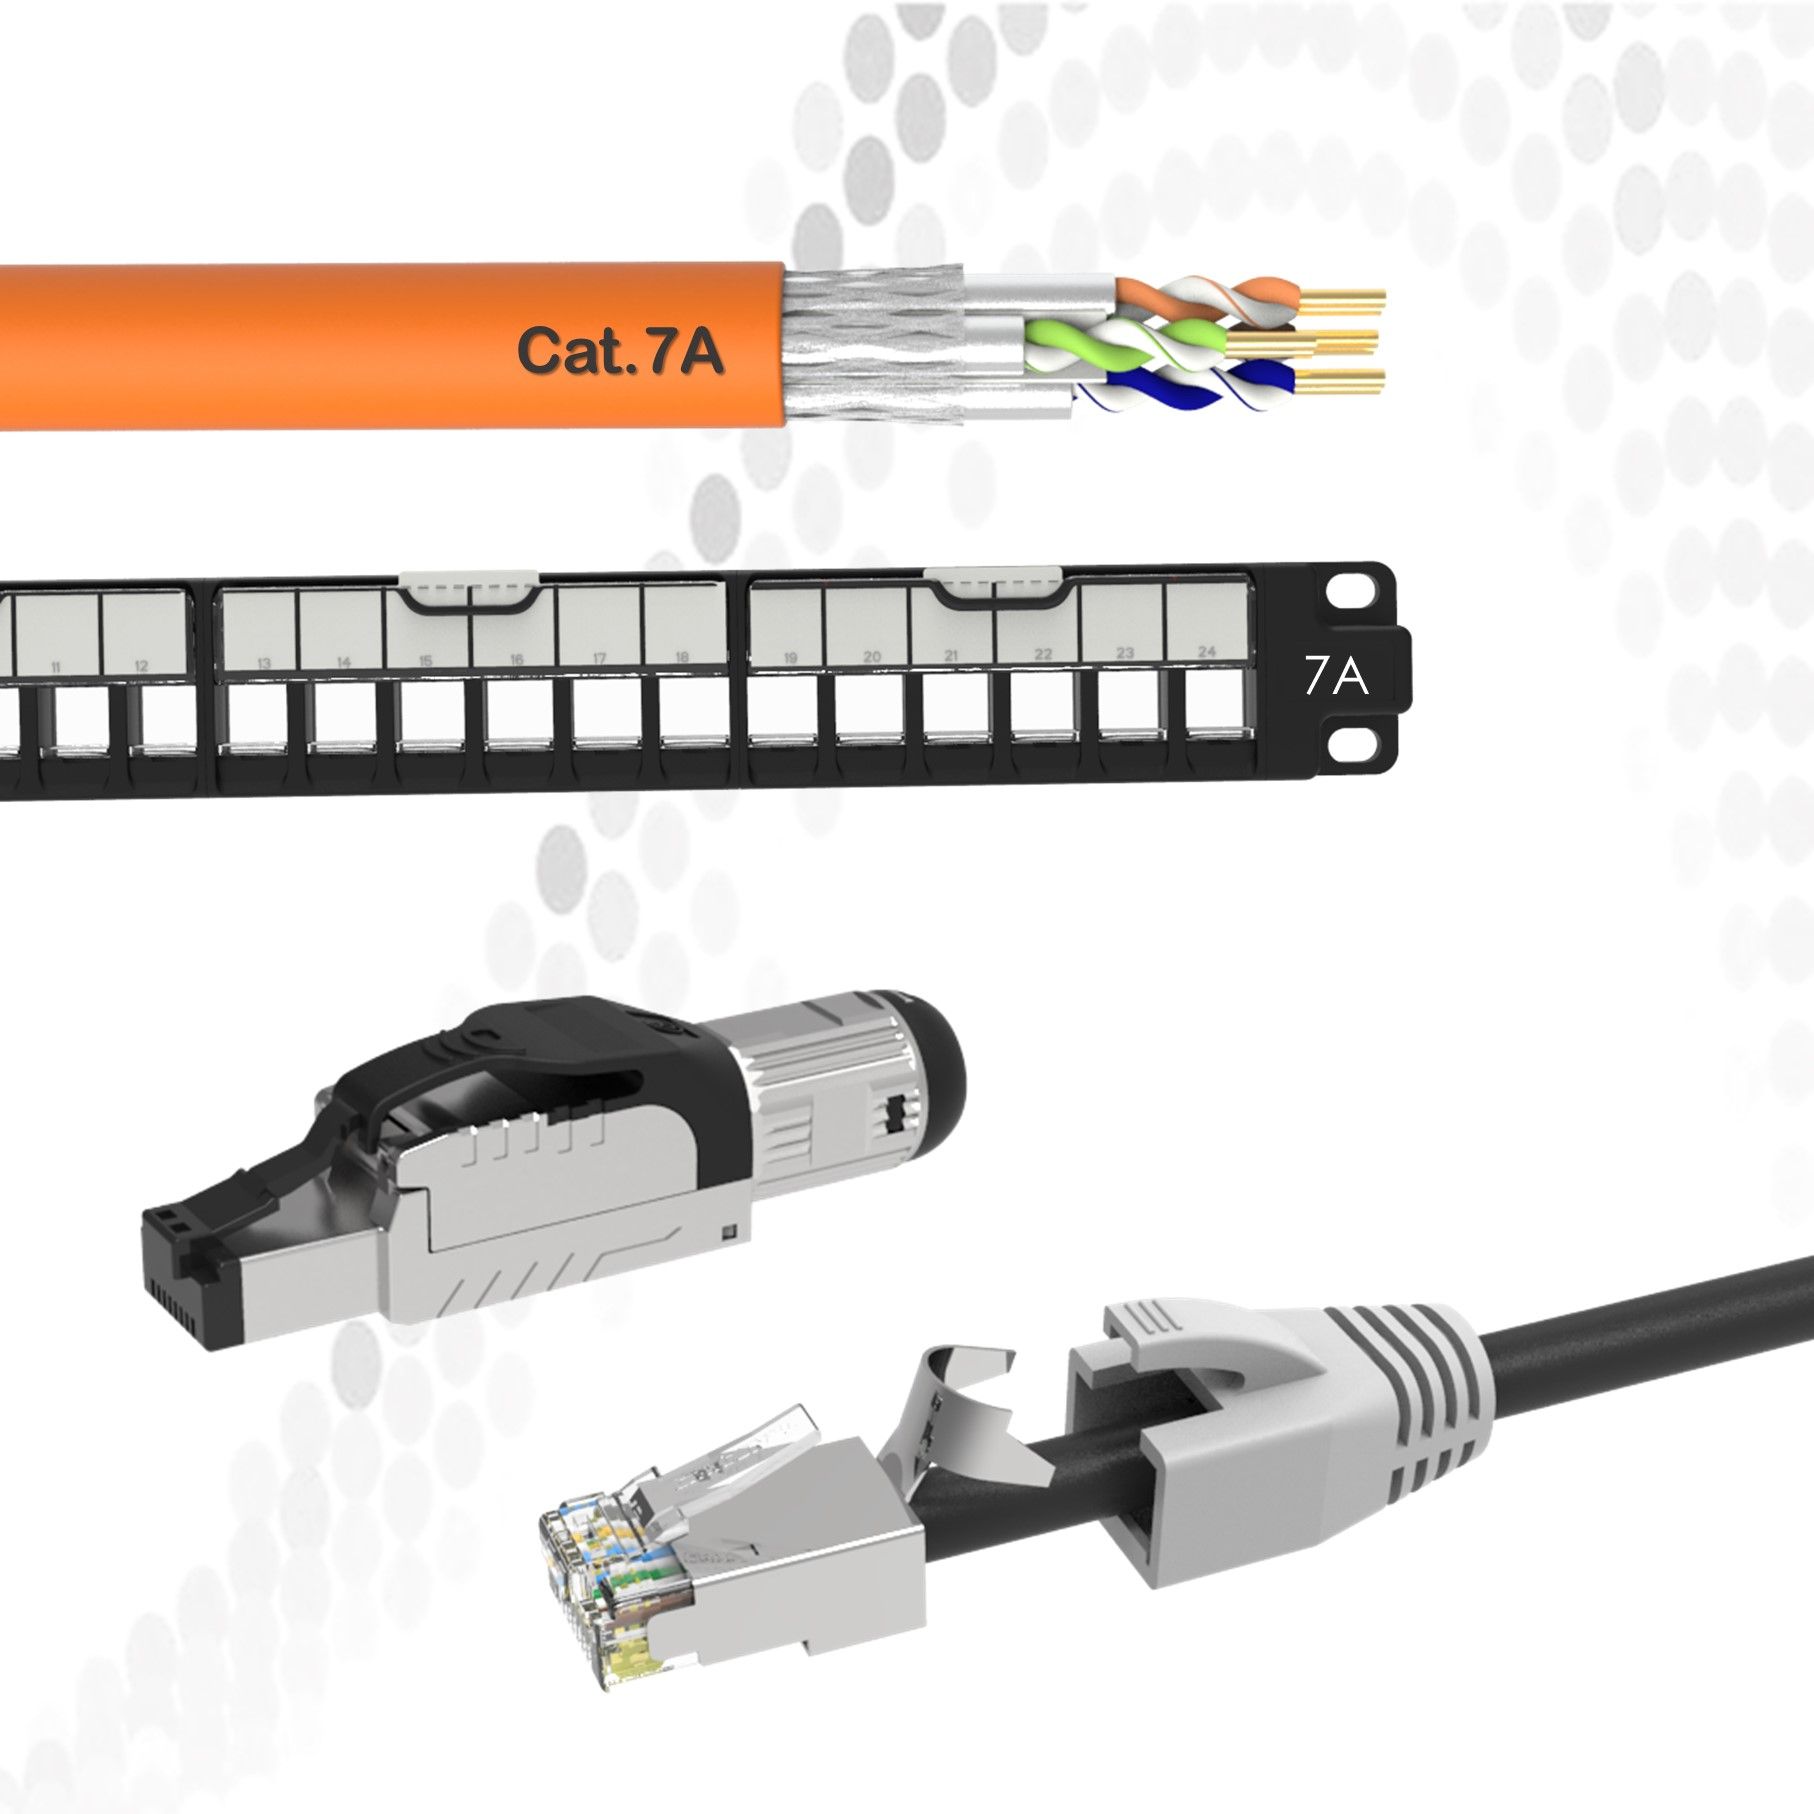 Структурована кабельна система Cat7A для 10G+ Ethernet рішення Cat7A